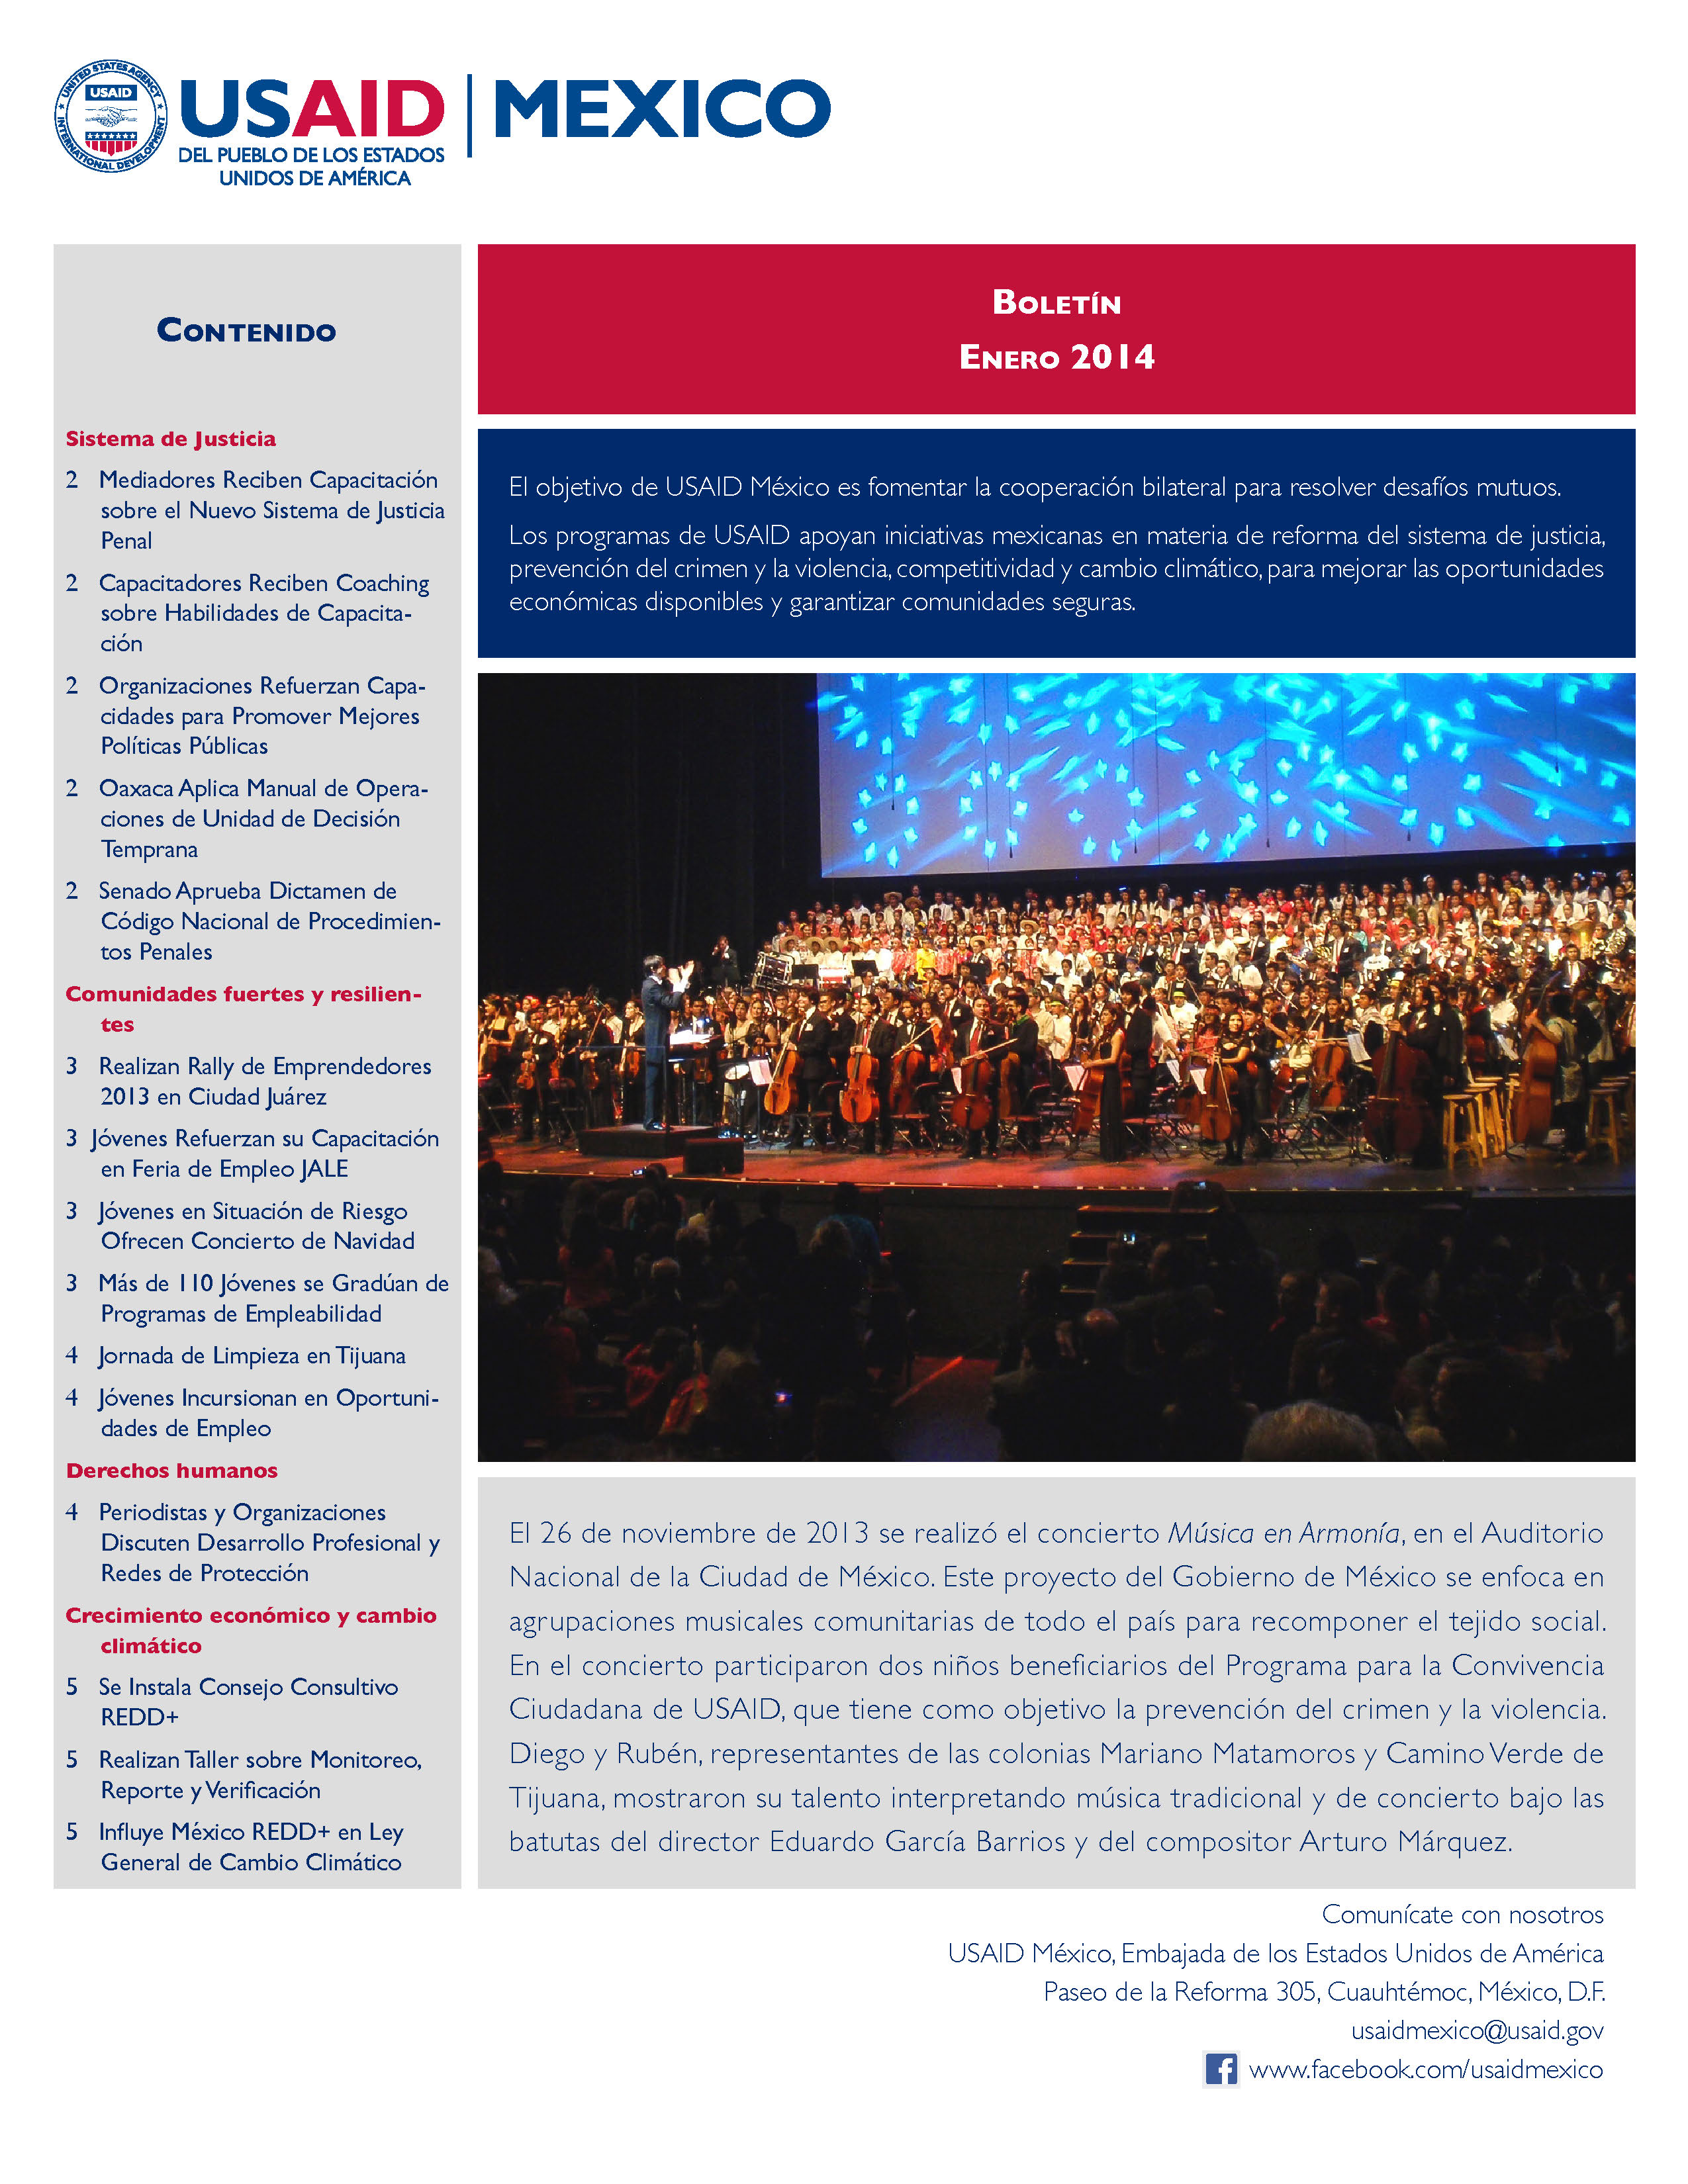 Boletín mensual de USAID México. Enero de 2014.